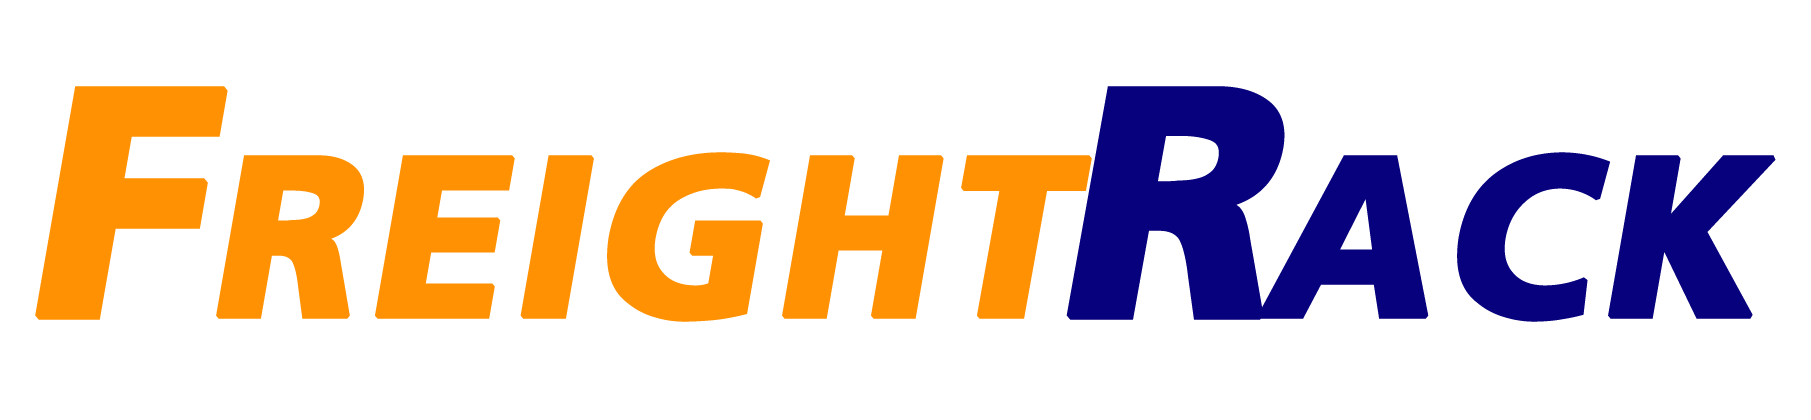 Freight rack logo